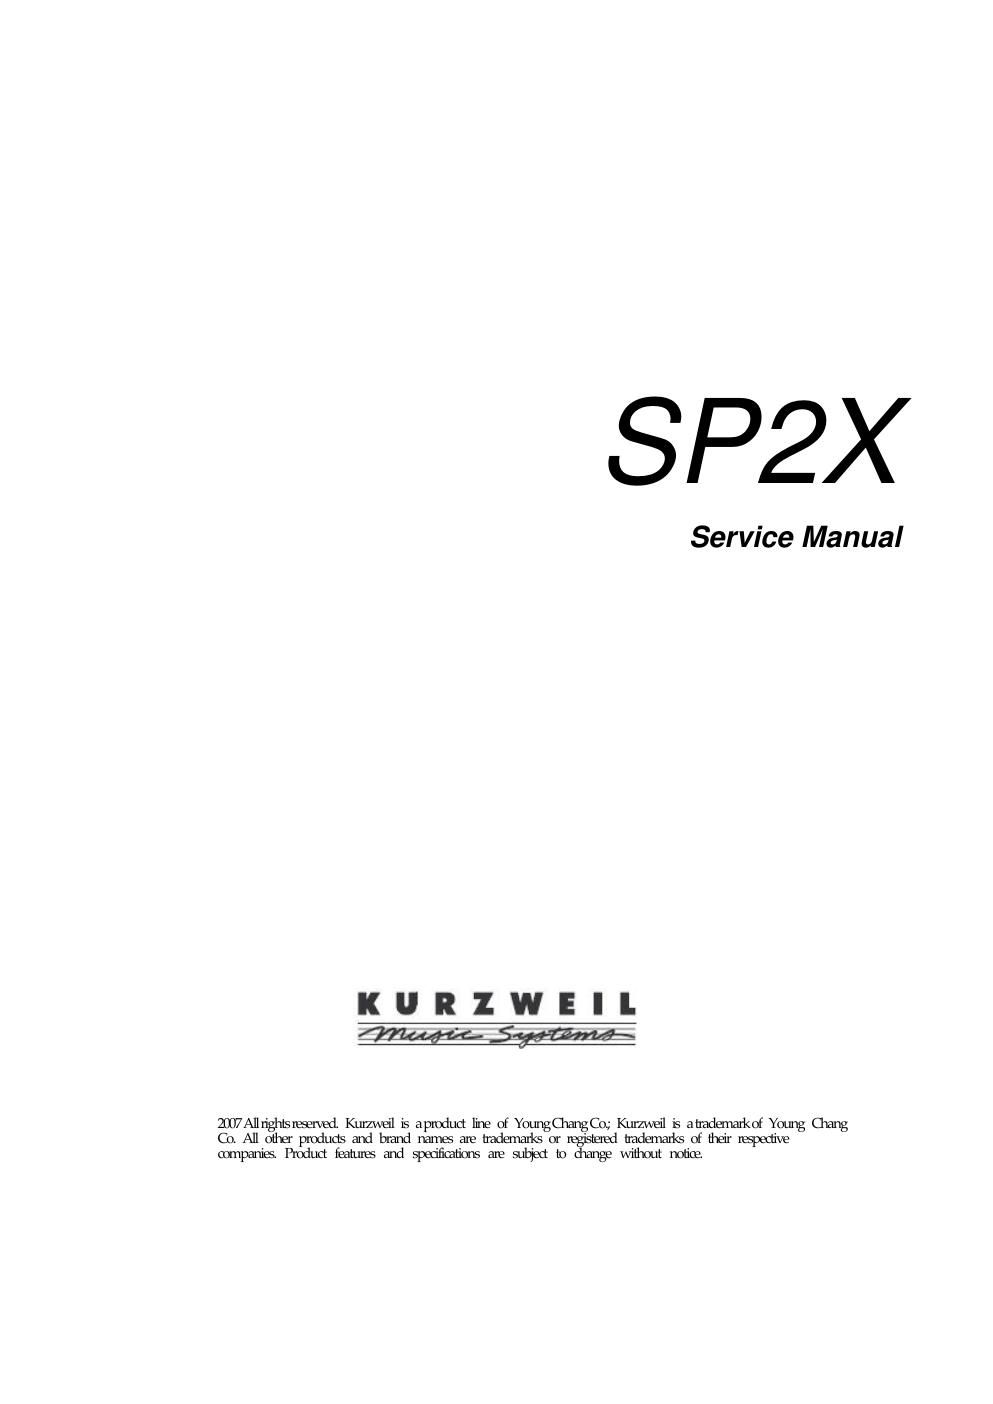 kurzweil sp2x service manual